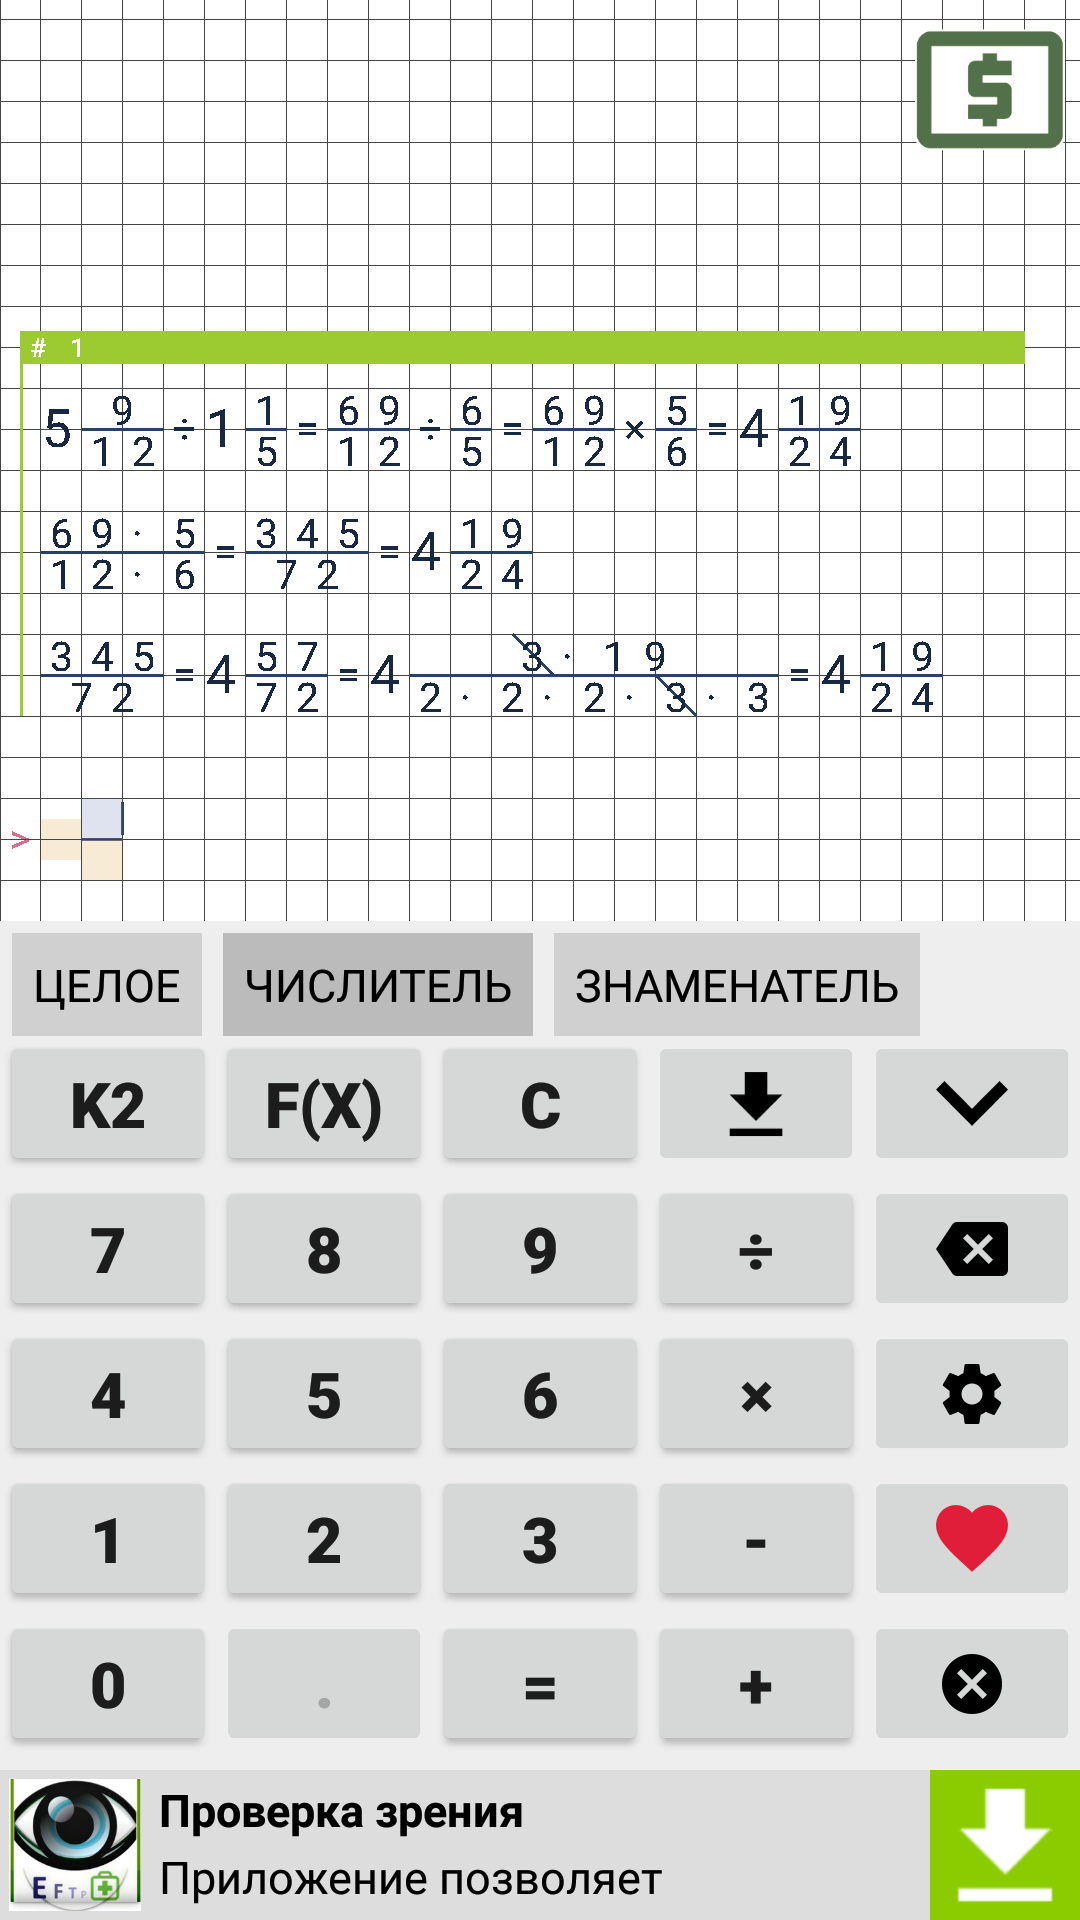 Калькулятор Дробей По Фото Онлайн Бесплатно